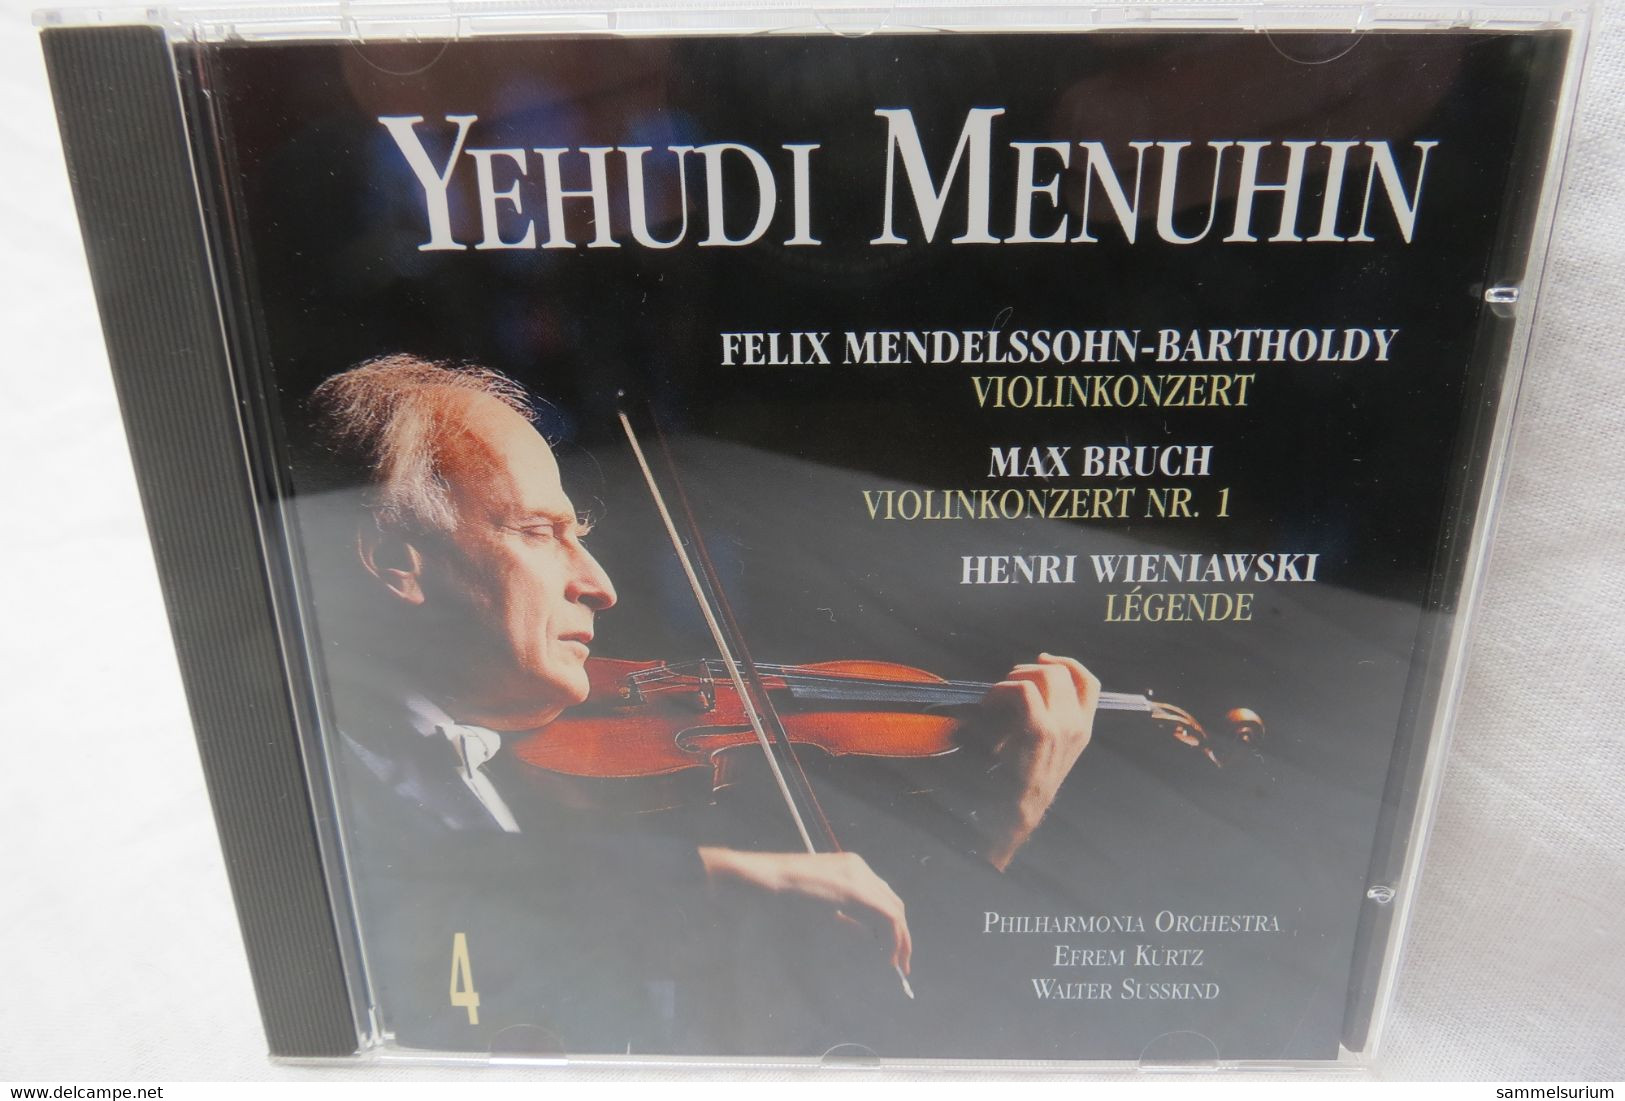 5 CDs "Yehudi Menuhin" Grosse Violinkonzerte